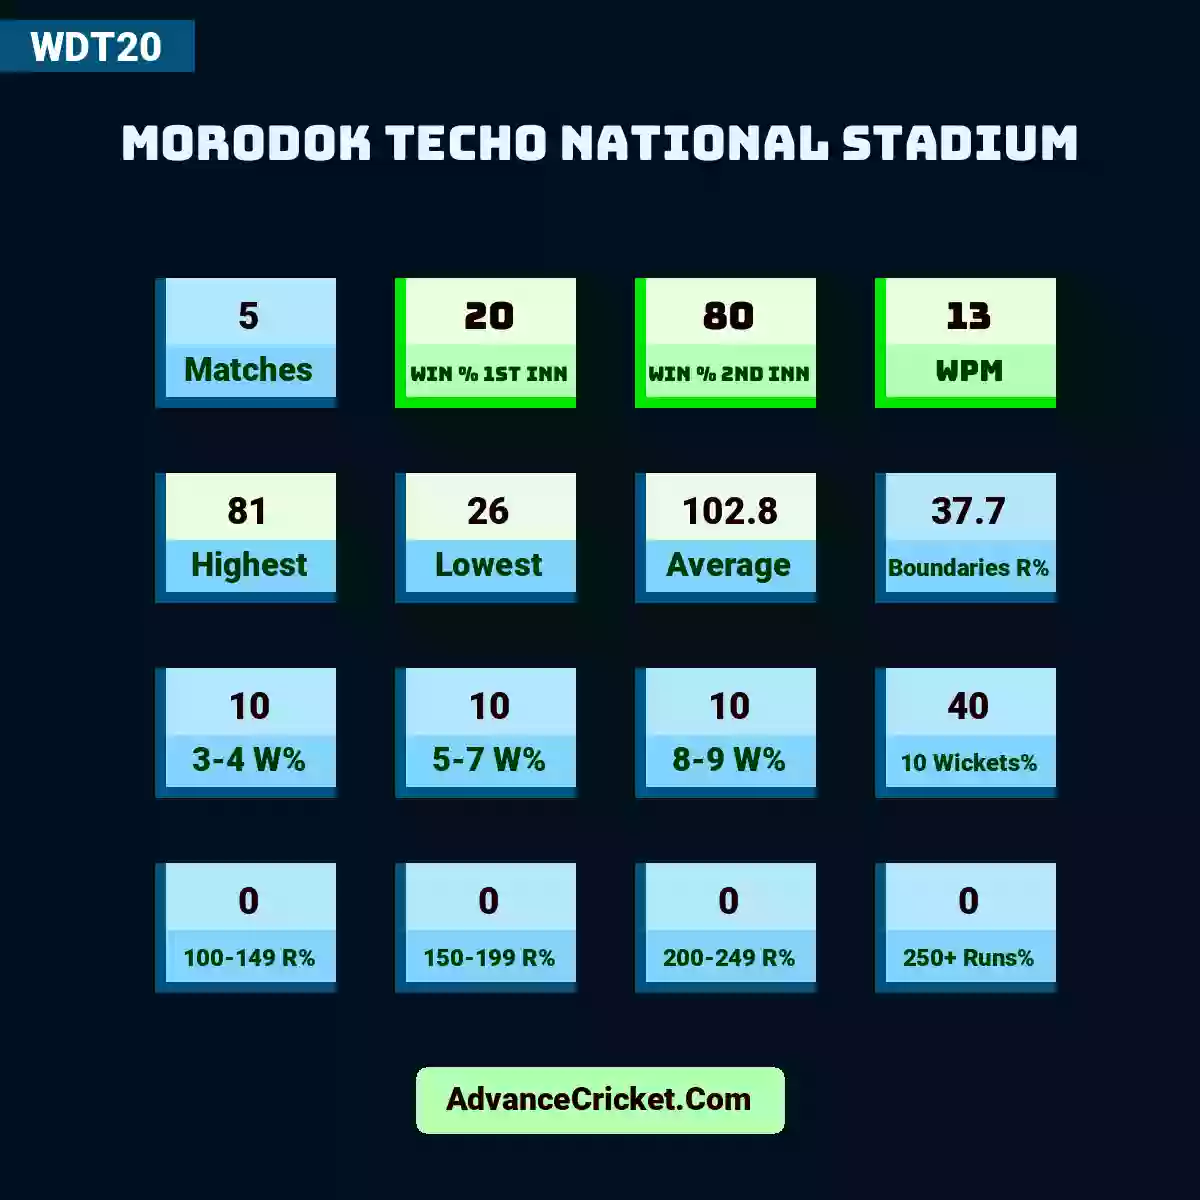 Image showing Morodok Techo National Stadium with Matches: 5, Win % 1st Inn: 20, Win % 2nd Inn: 80, WPM: 13, Highest: 81, Lowest: 26, Average: 102.8, Boundaries R%: 37.7, 3-4 W%: 10, 5-7 W%: 10, 8-9 W%: 10, 10 Wickets%: 40, 100-149 R%: 0, 150-199 R%: 0, 200-249 R%: 0, 250+ Runs%: 0.